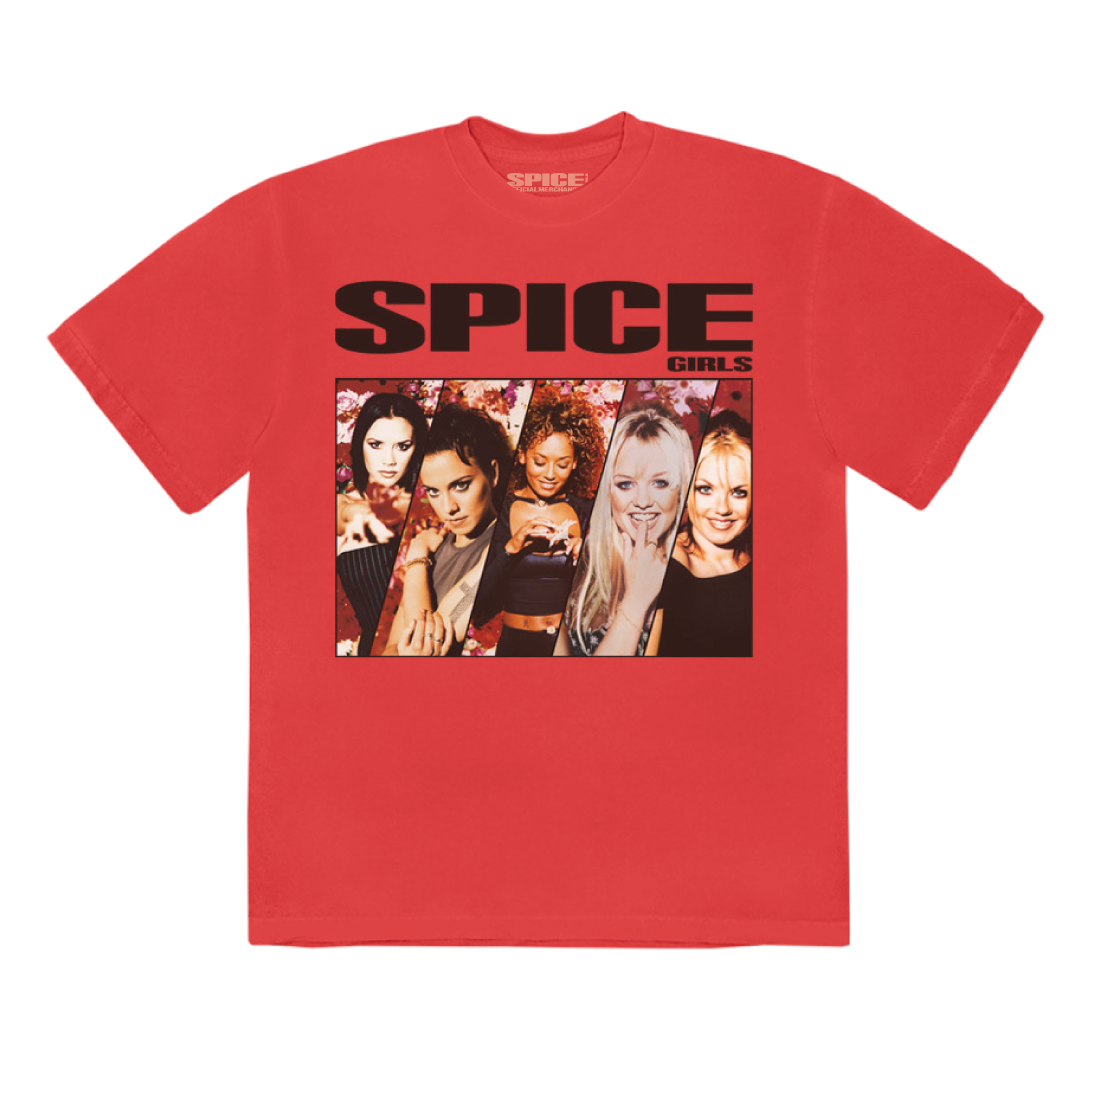 Spice Girls - Spice Girls Photo T-shirt I